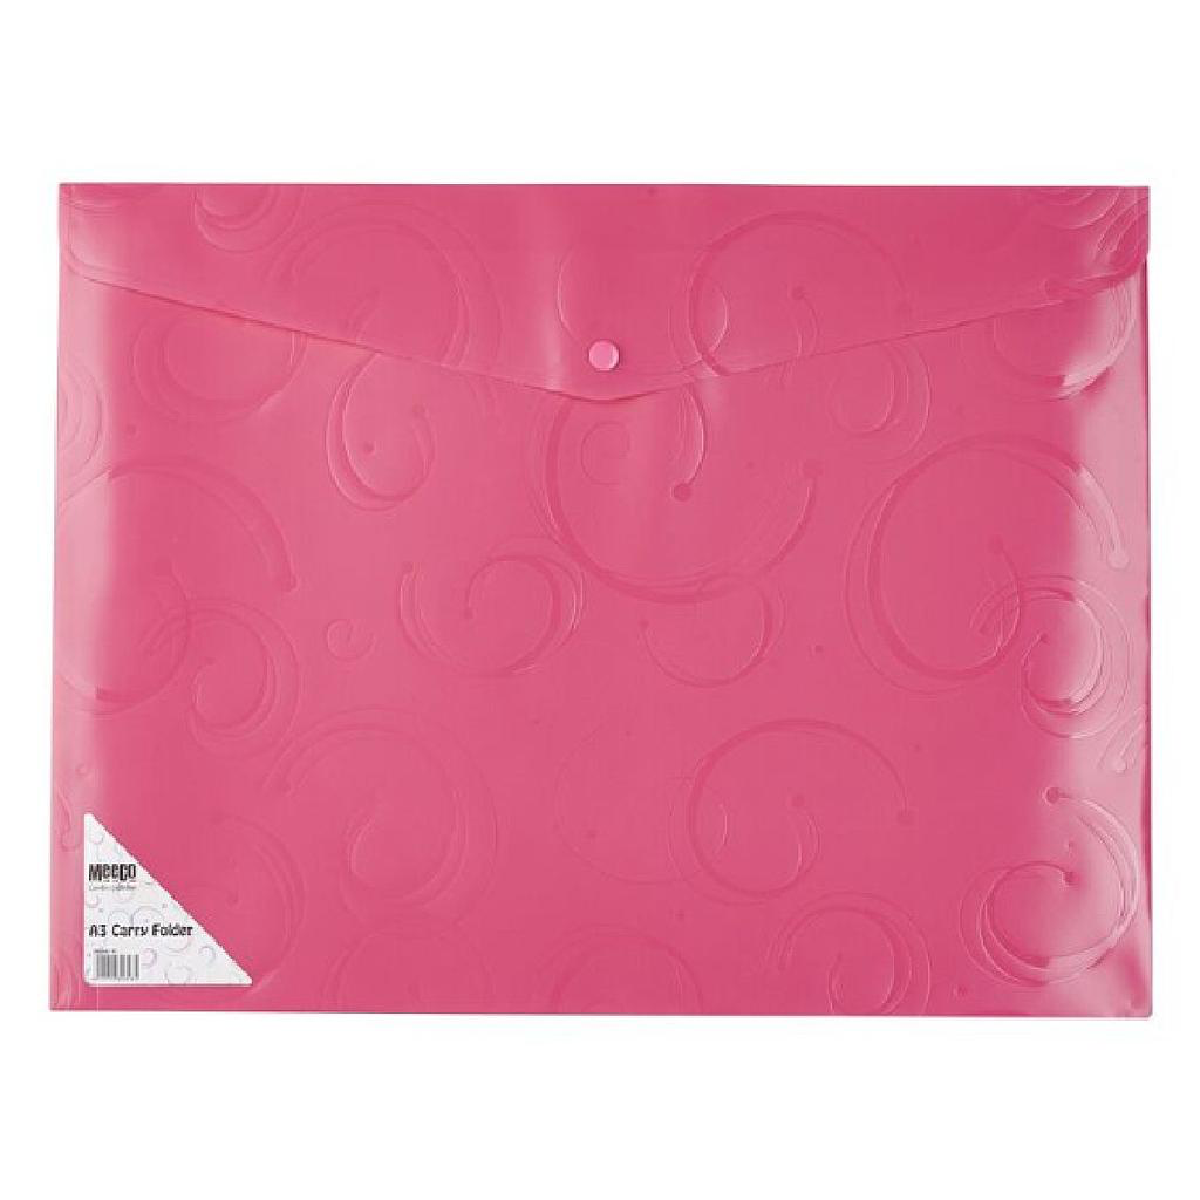 Meeco A3 Creative Carry Folder Pink